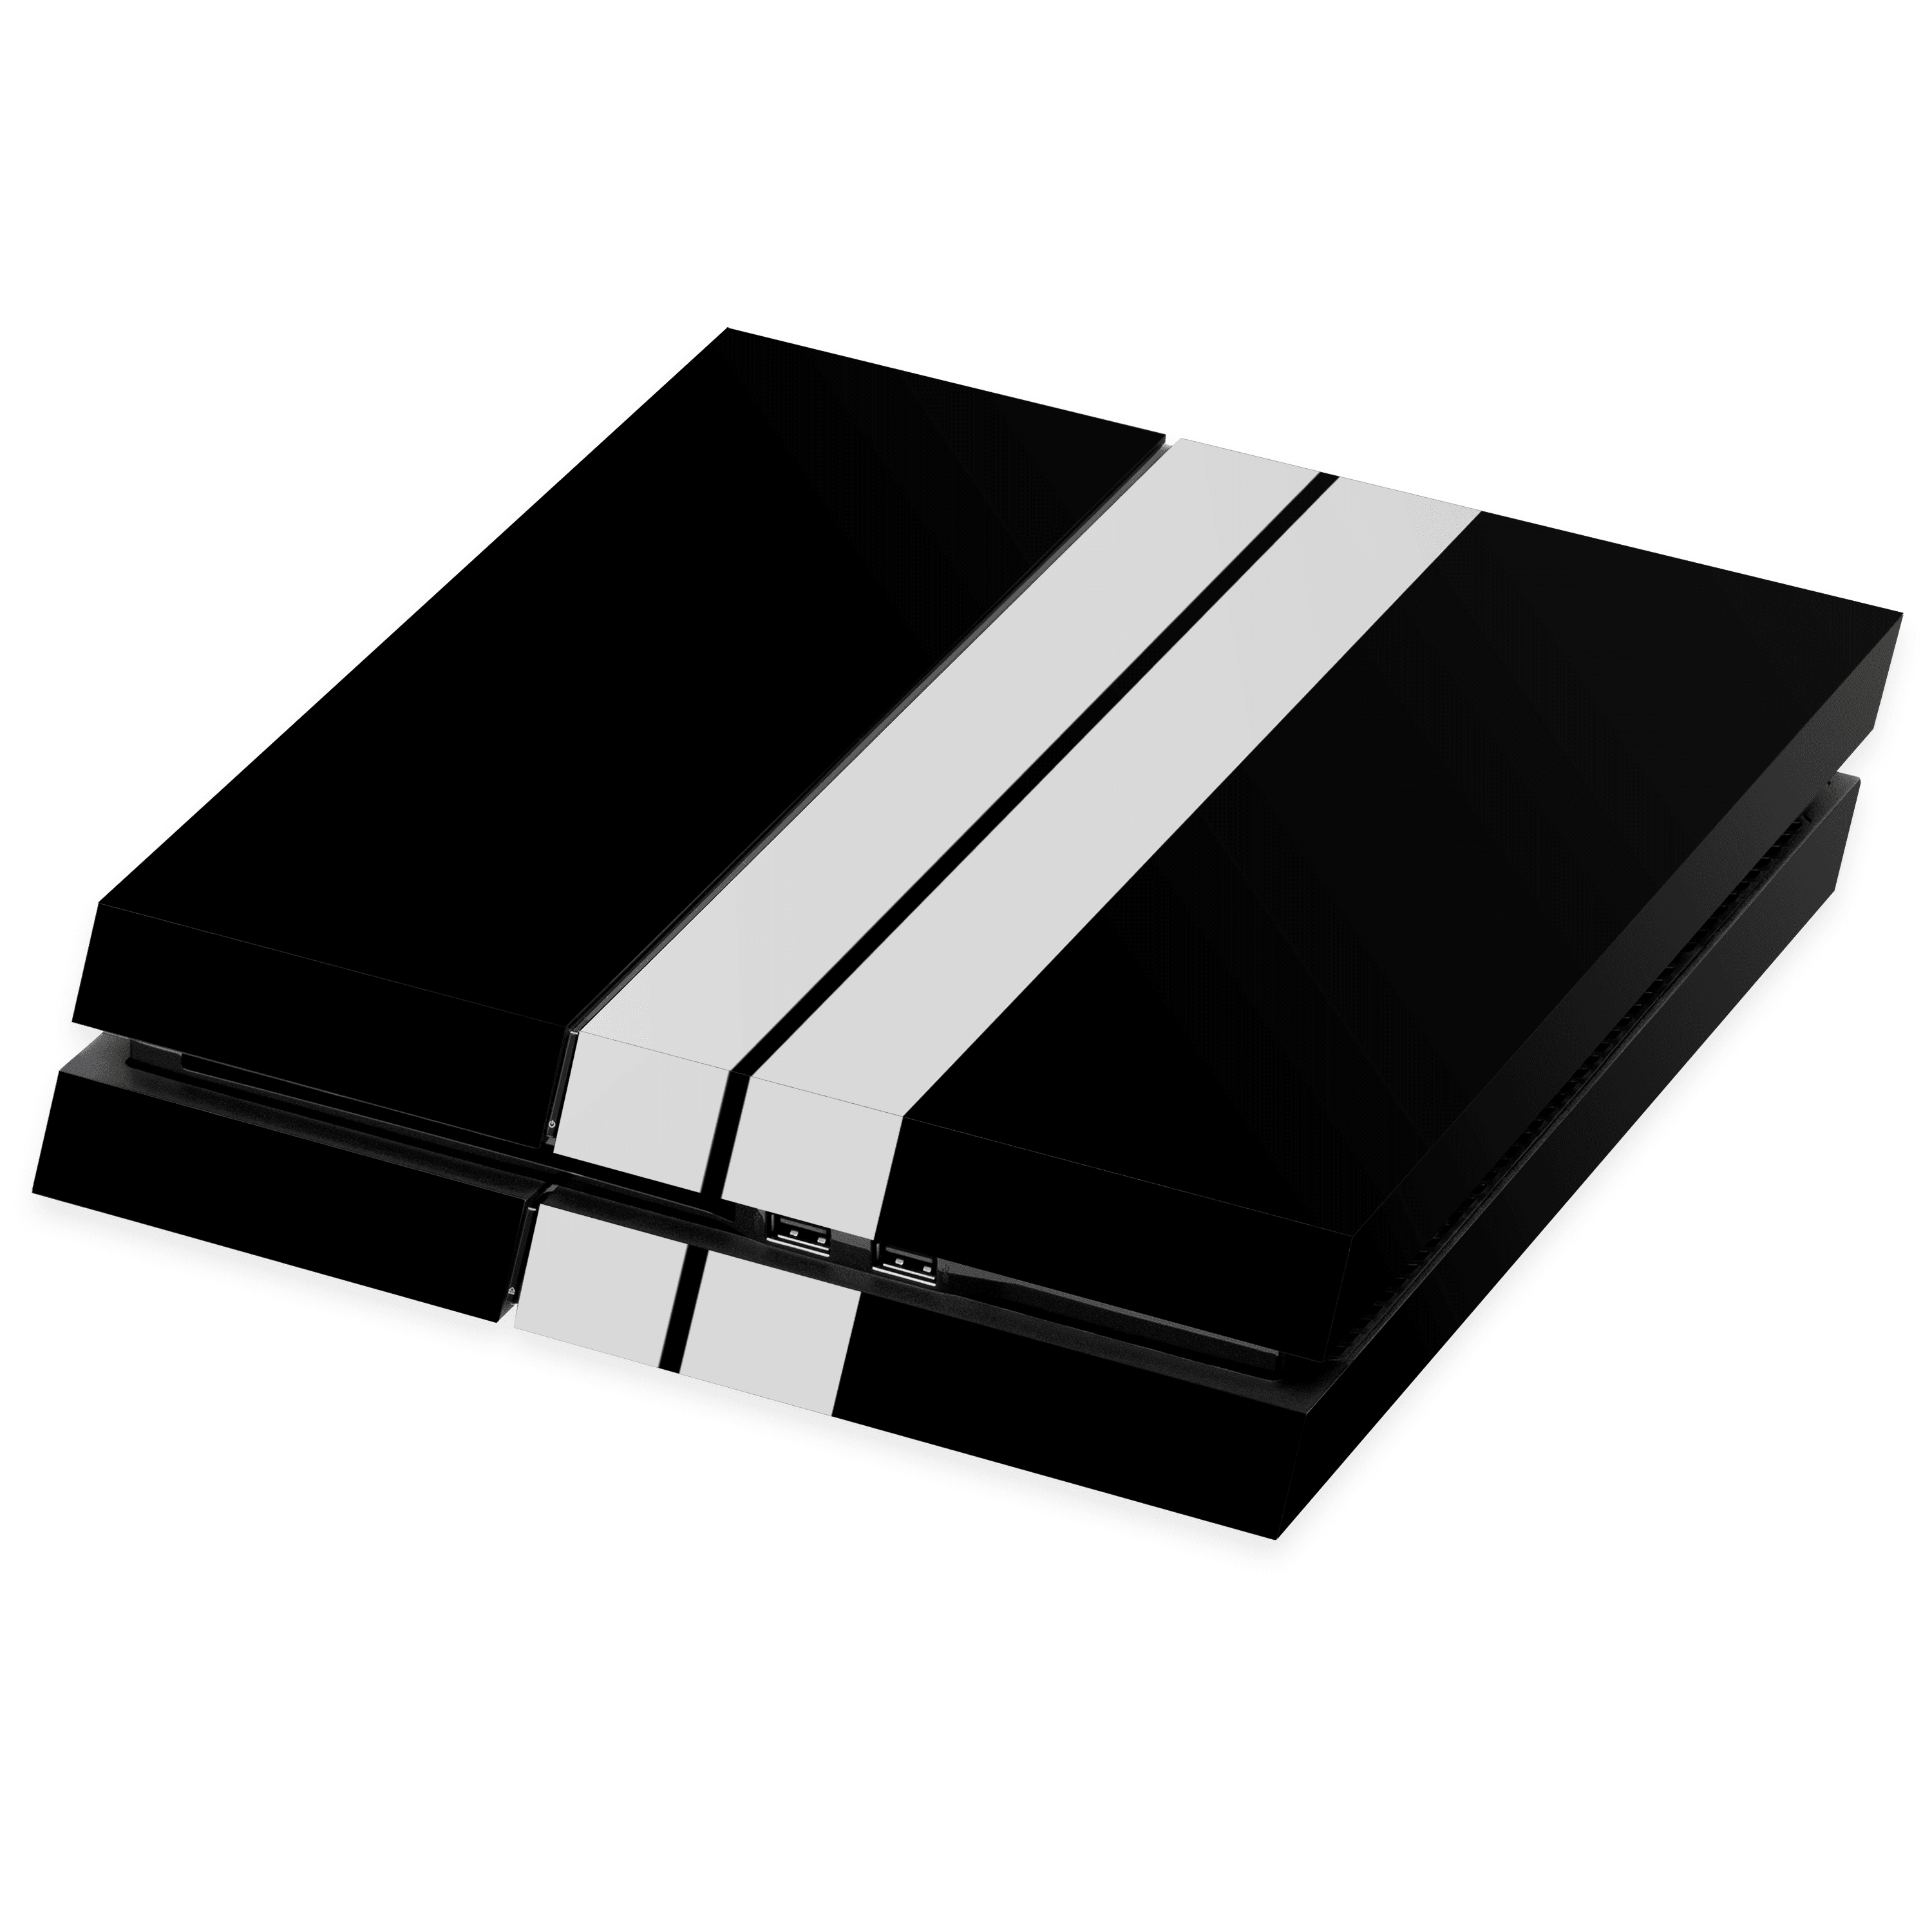 PlayStation 4 Kaplama Siyah Çift Beyaz Şerit